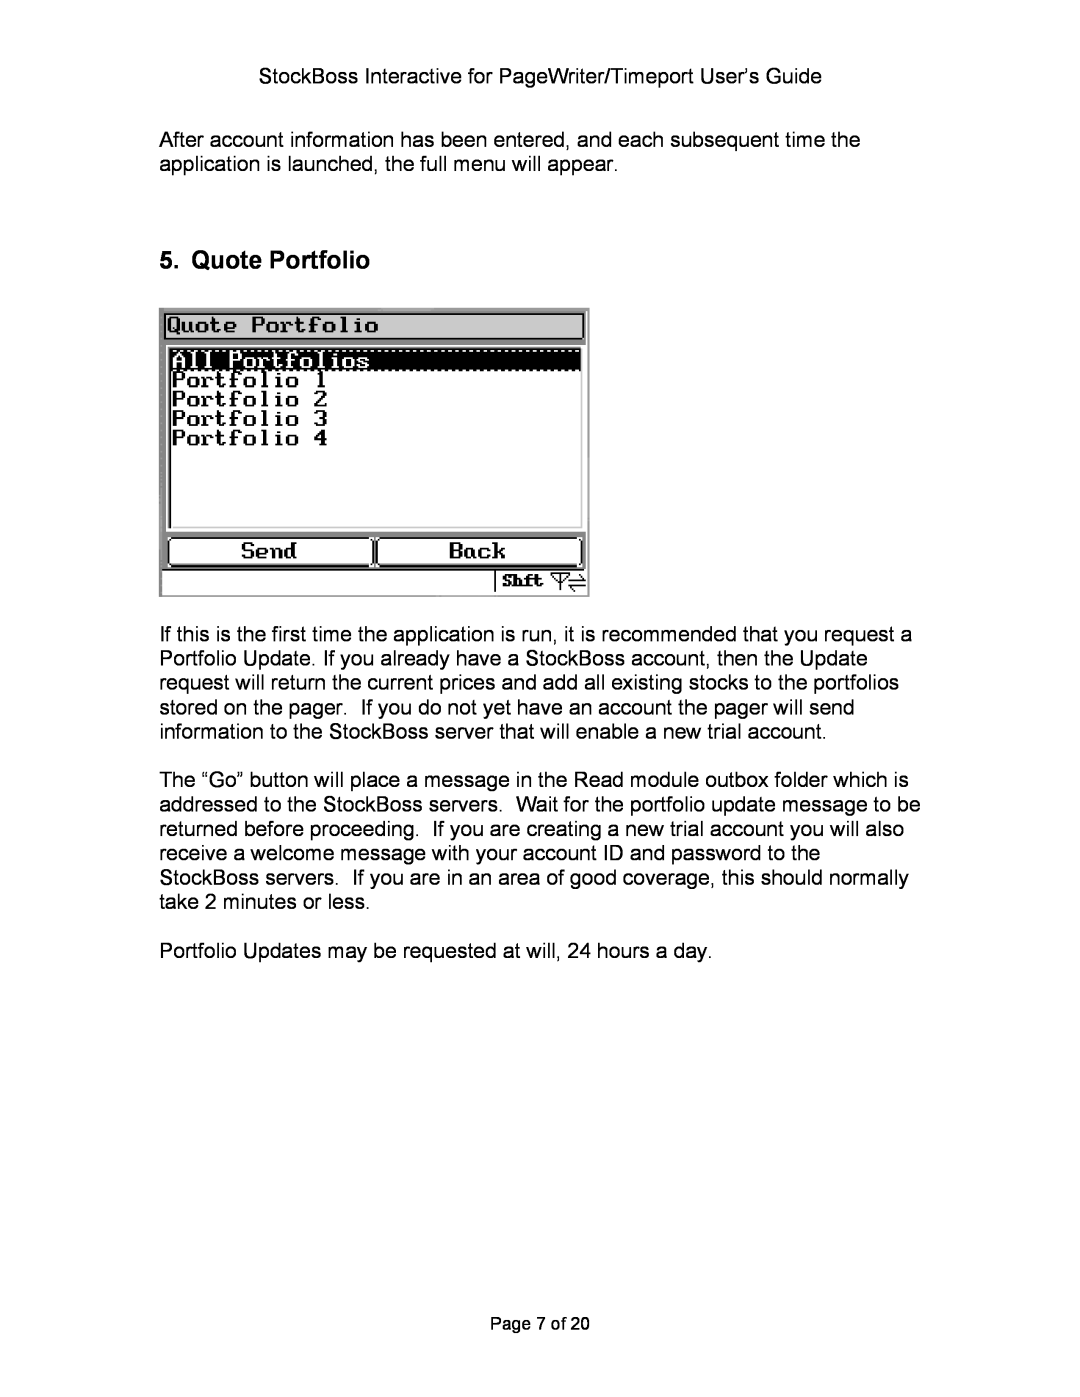 Motorola P930 Series manual Quote Portfolio, Page 7 of 